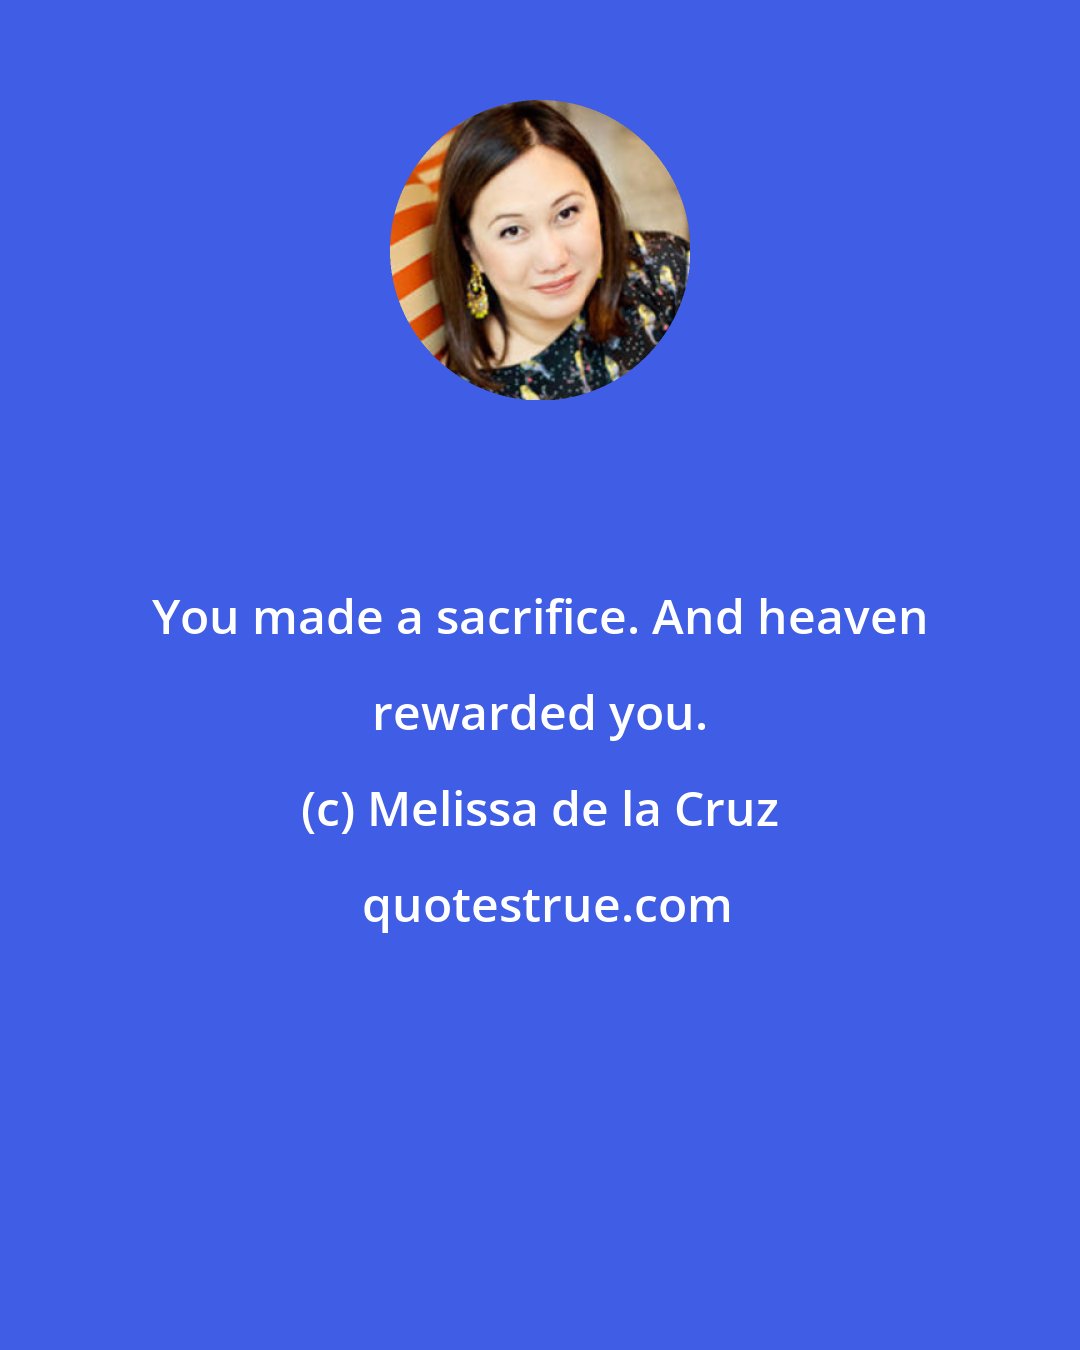 Melissa de la Cruz: You made a sacrifice. And heaven rewarded you.